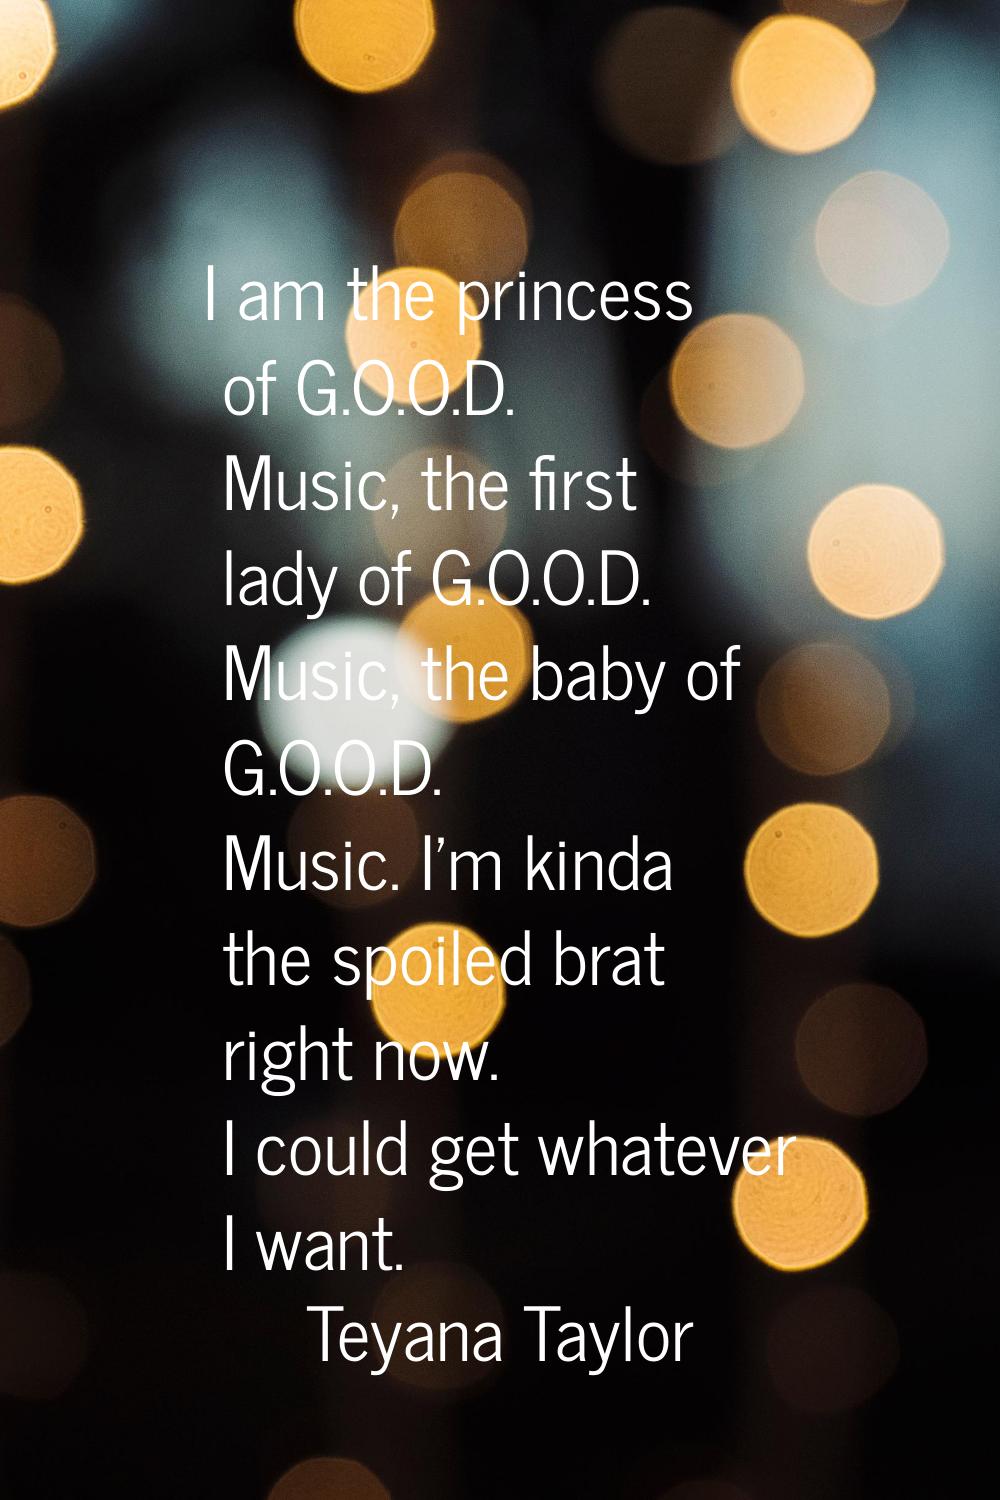 I am the princess of G.O.O.D. Music, the first lady of G.O.O.D. Music, the baby of G.O.O.D. Music. 